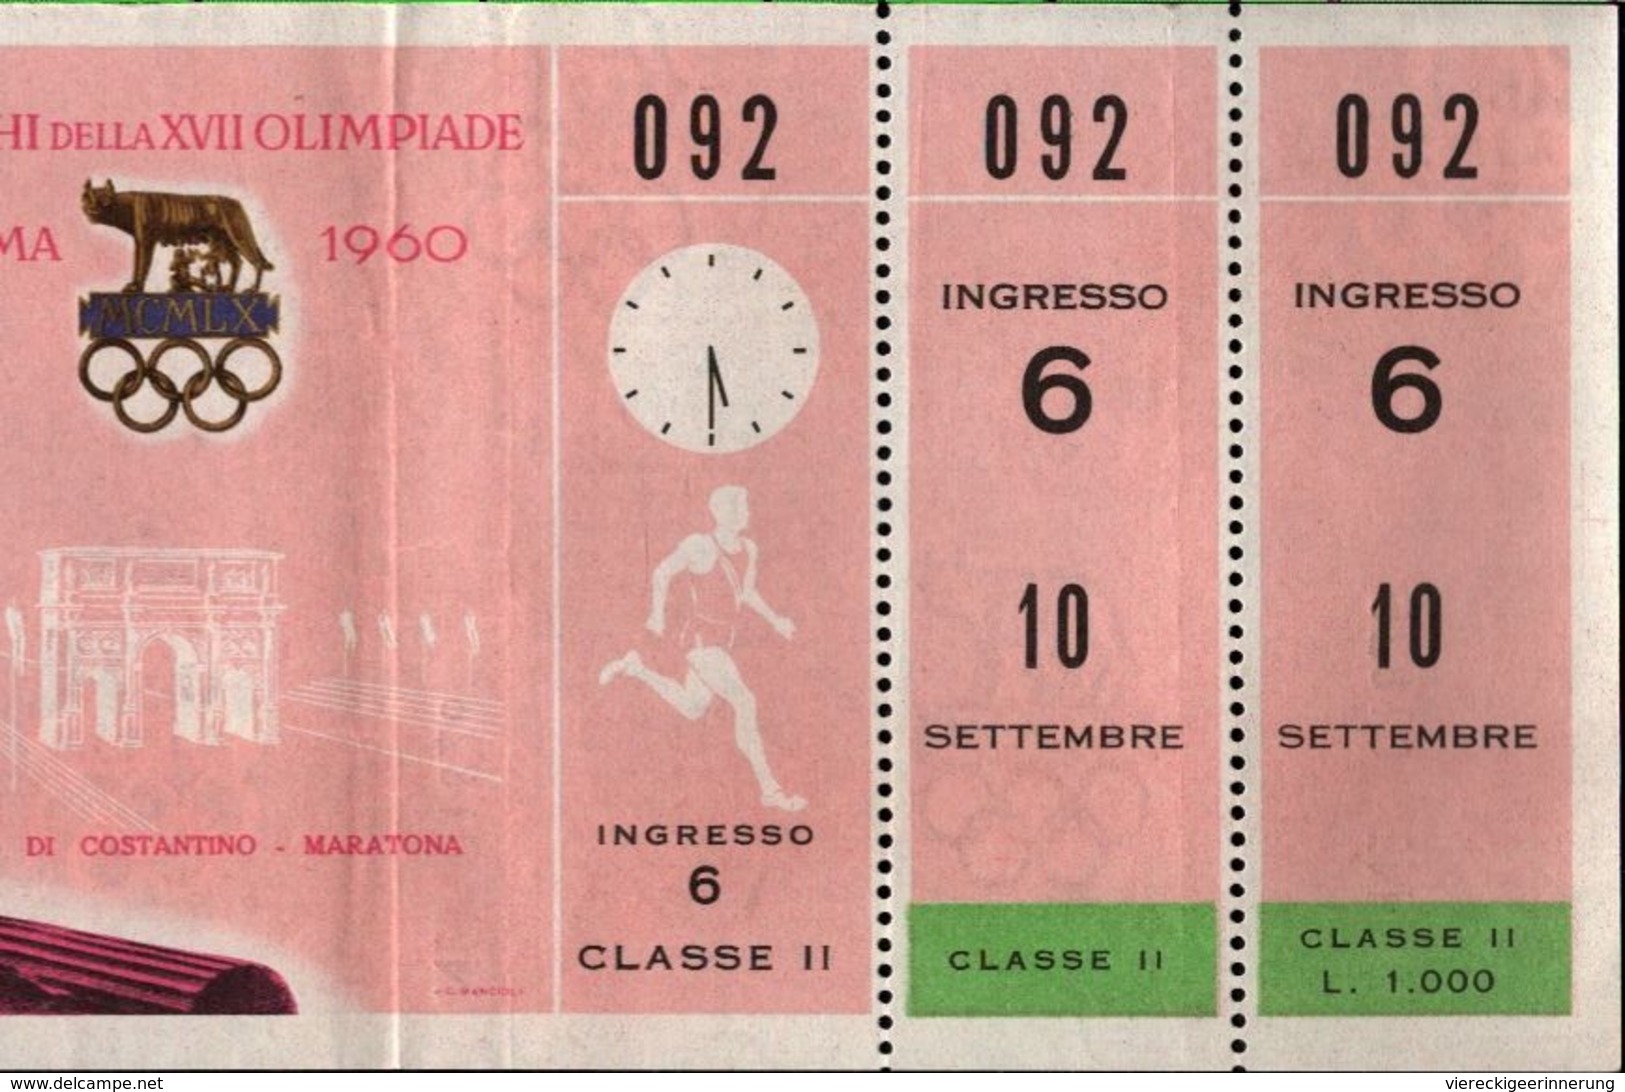 ! Olympiade Rom , Roma, 1960 interessantes Konvolut über 25 Teile, 9 Eintrittskarten, Programme, Reiseunterlagen etc.